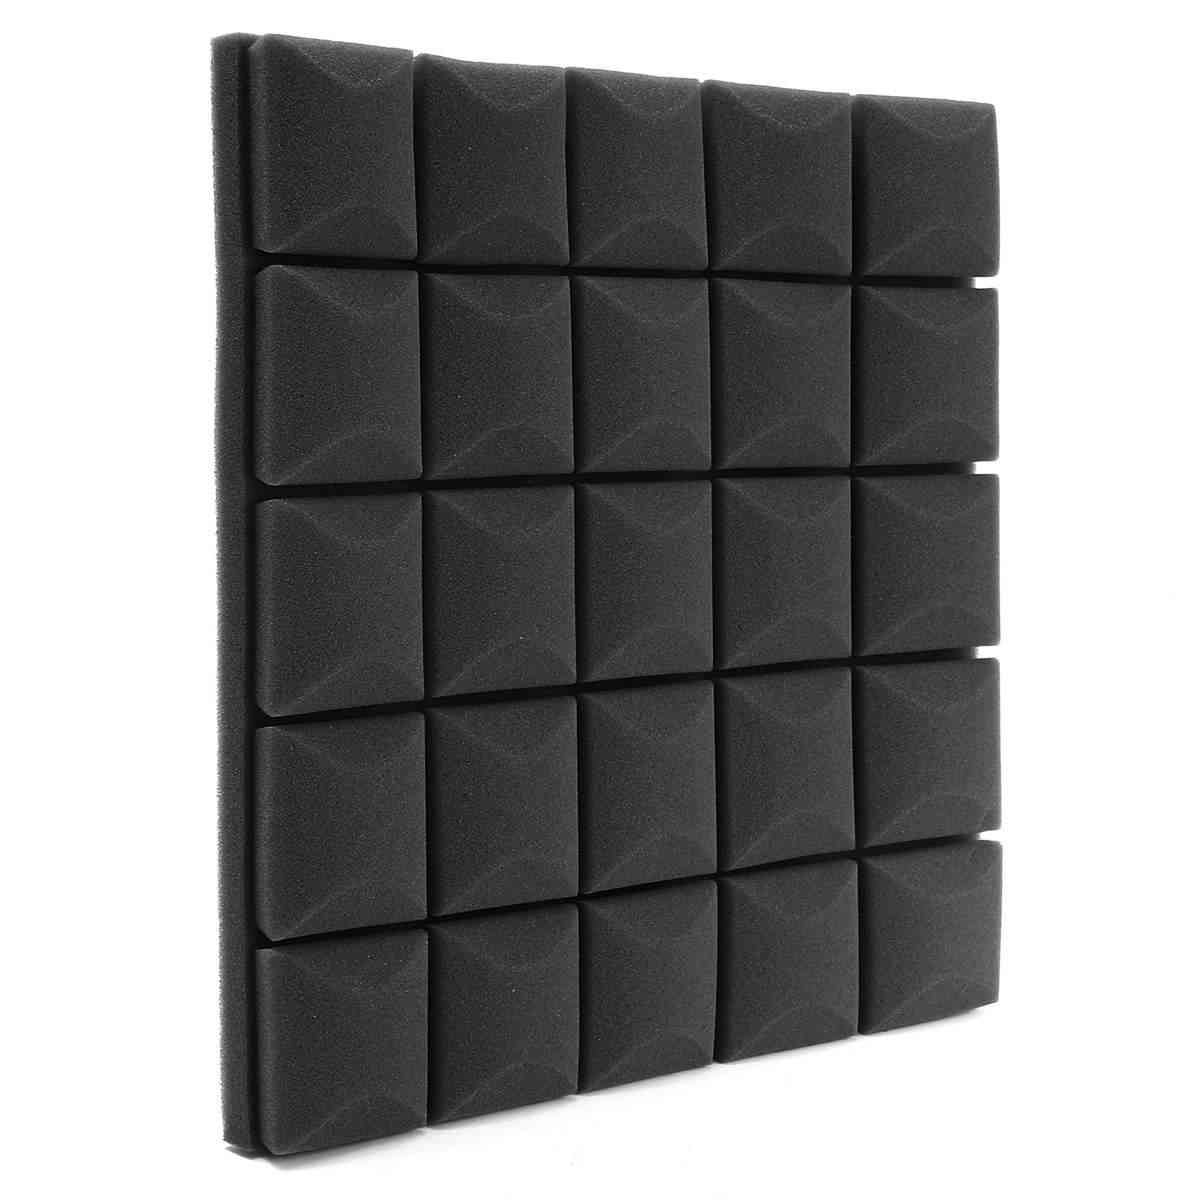 Studio Acoustic Panels Soundproofing Foam, Absorption Sponge